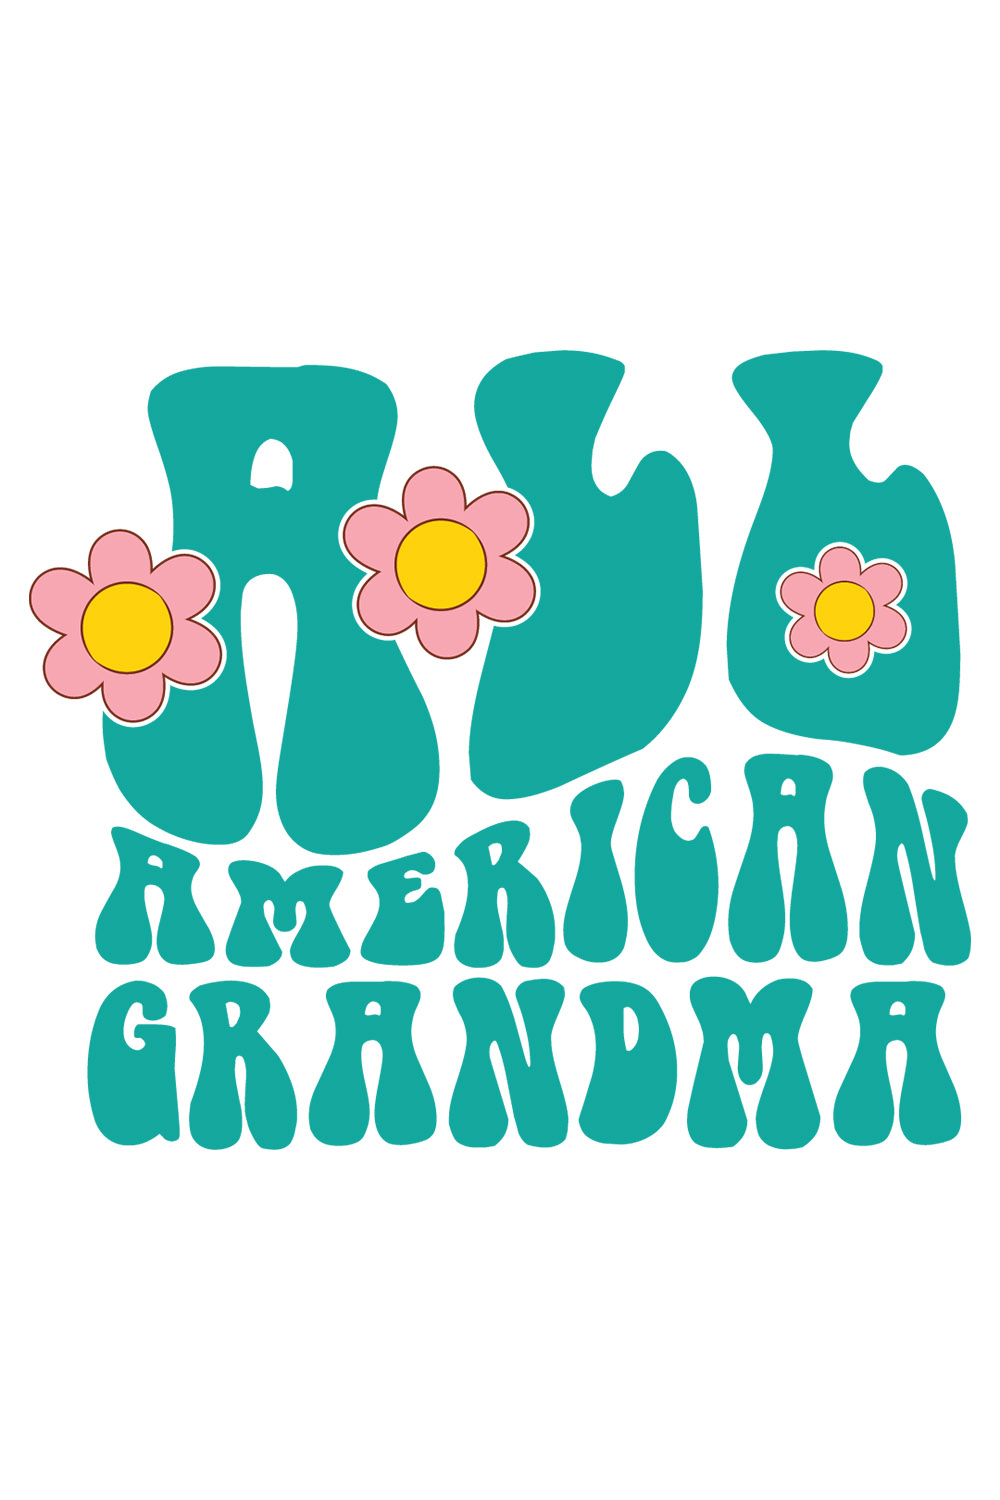 All American Grandma pinterest preview image.